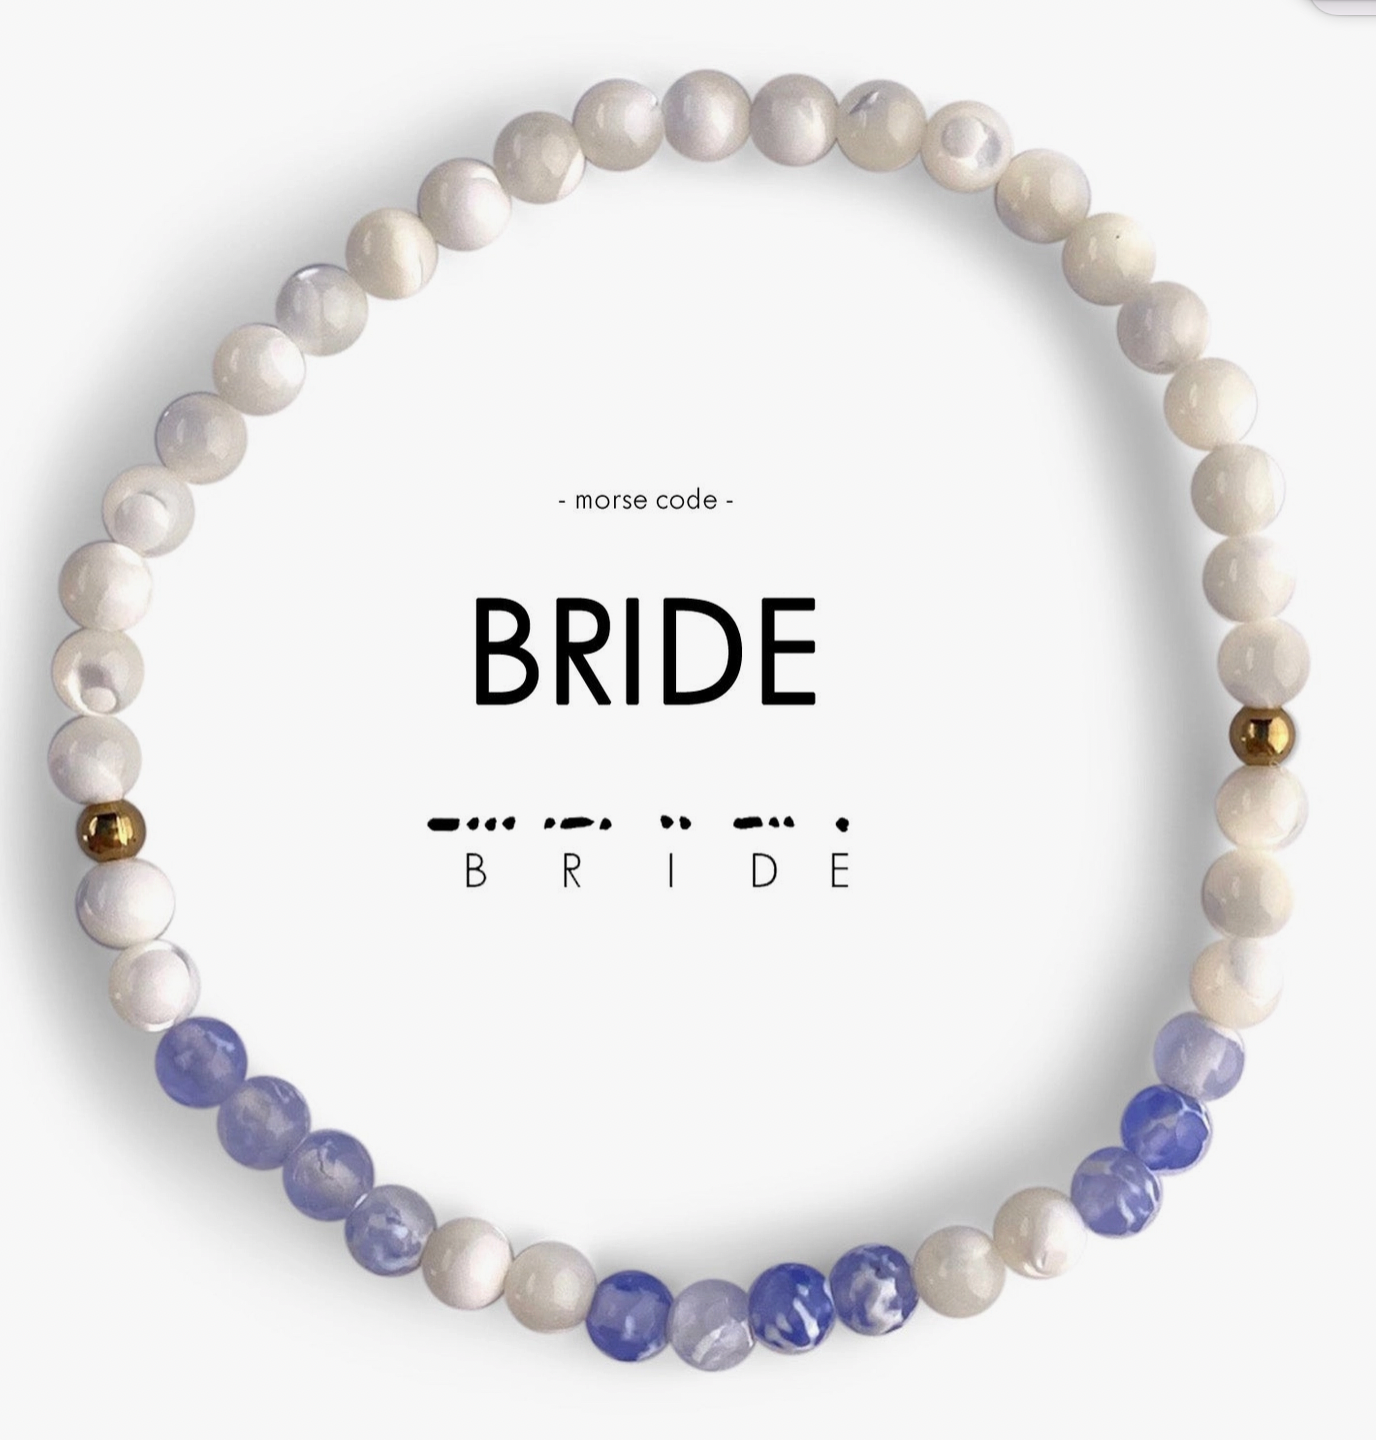 Bride - Morse Code Bracelet